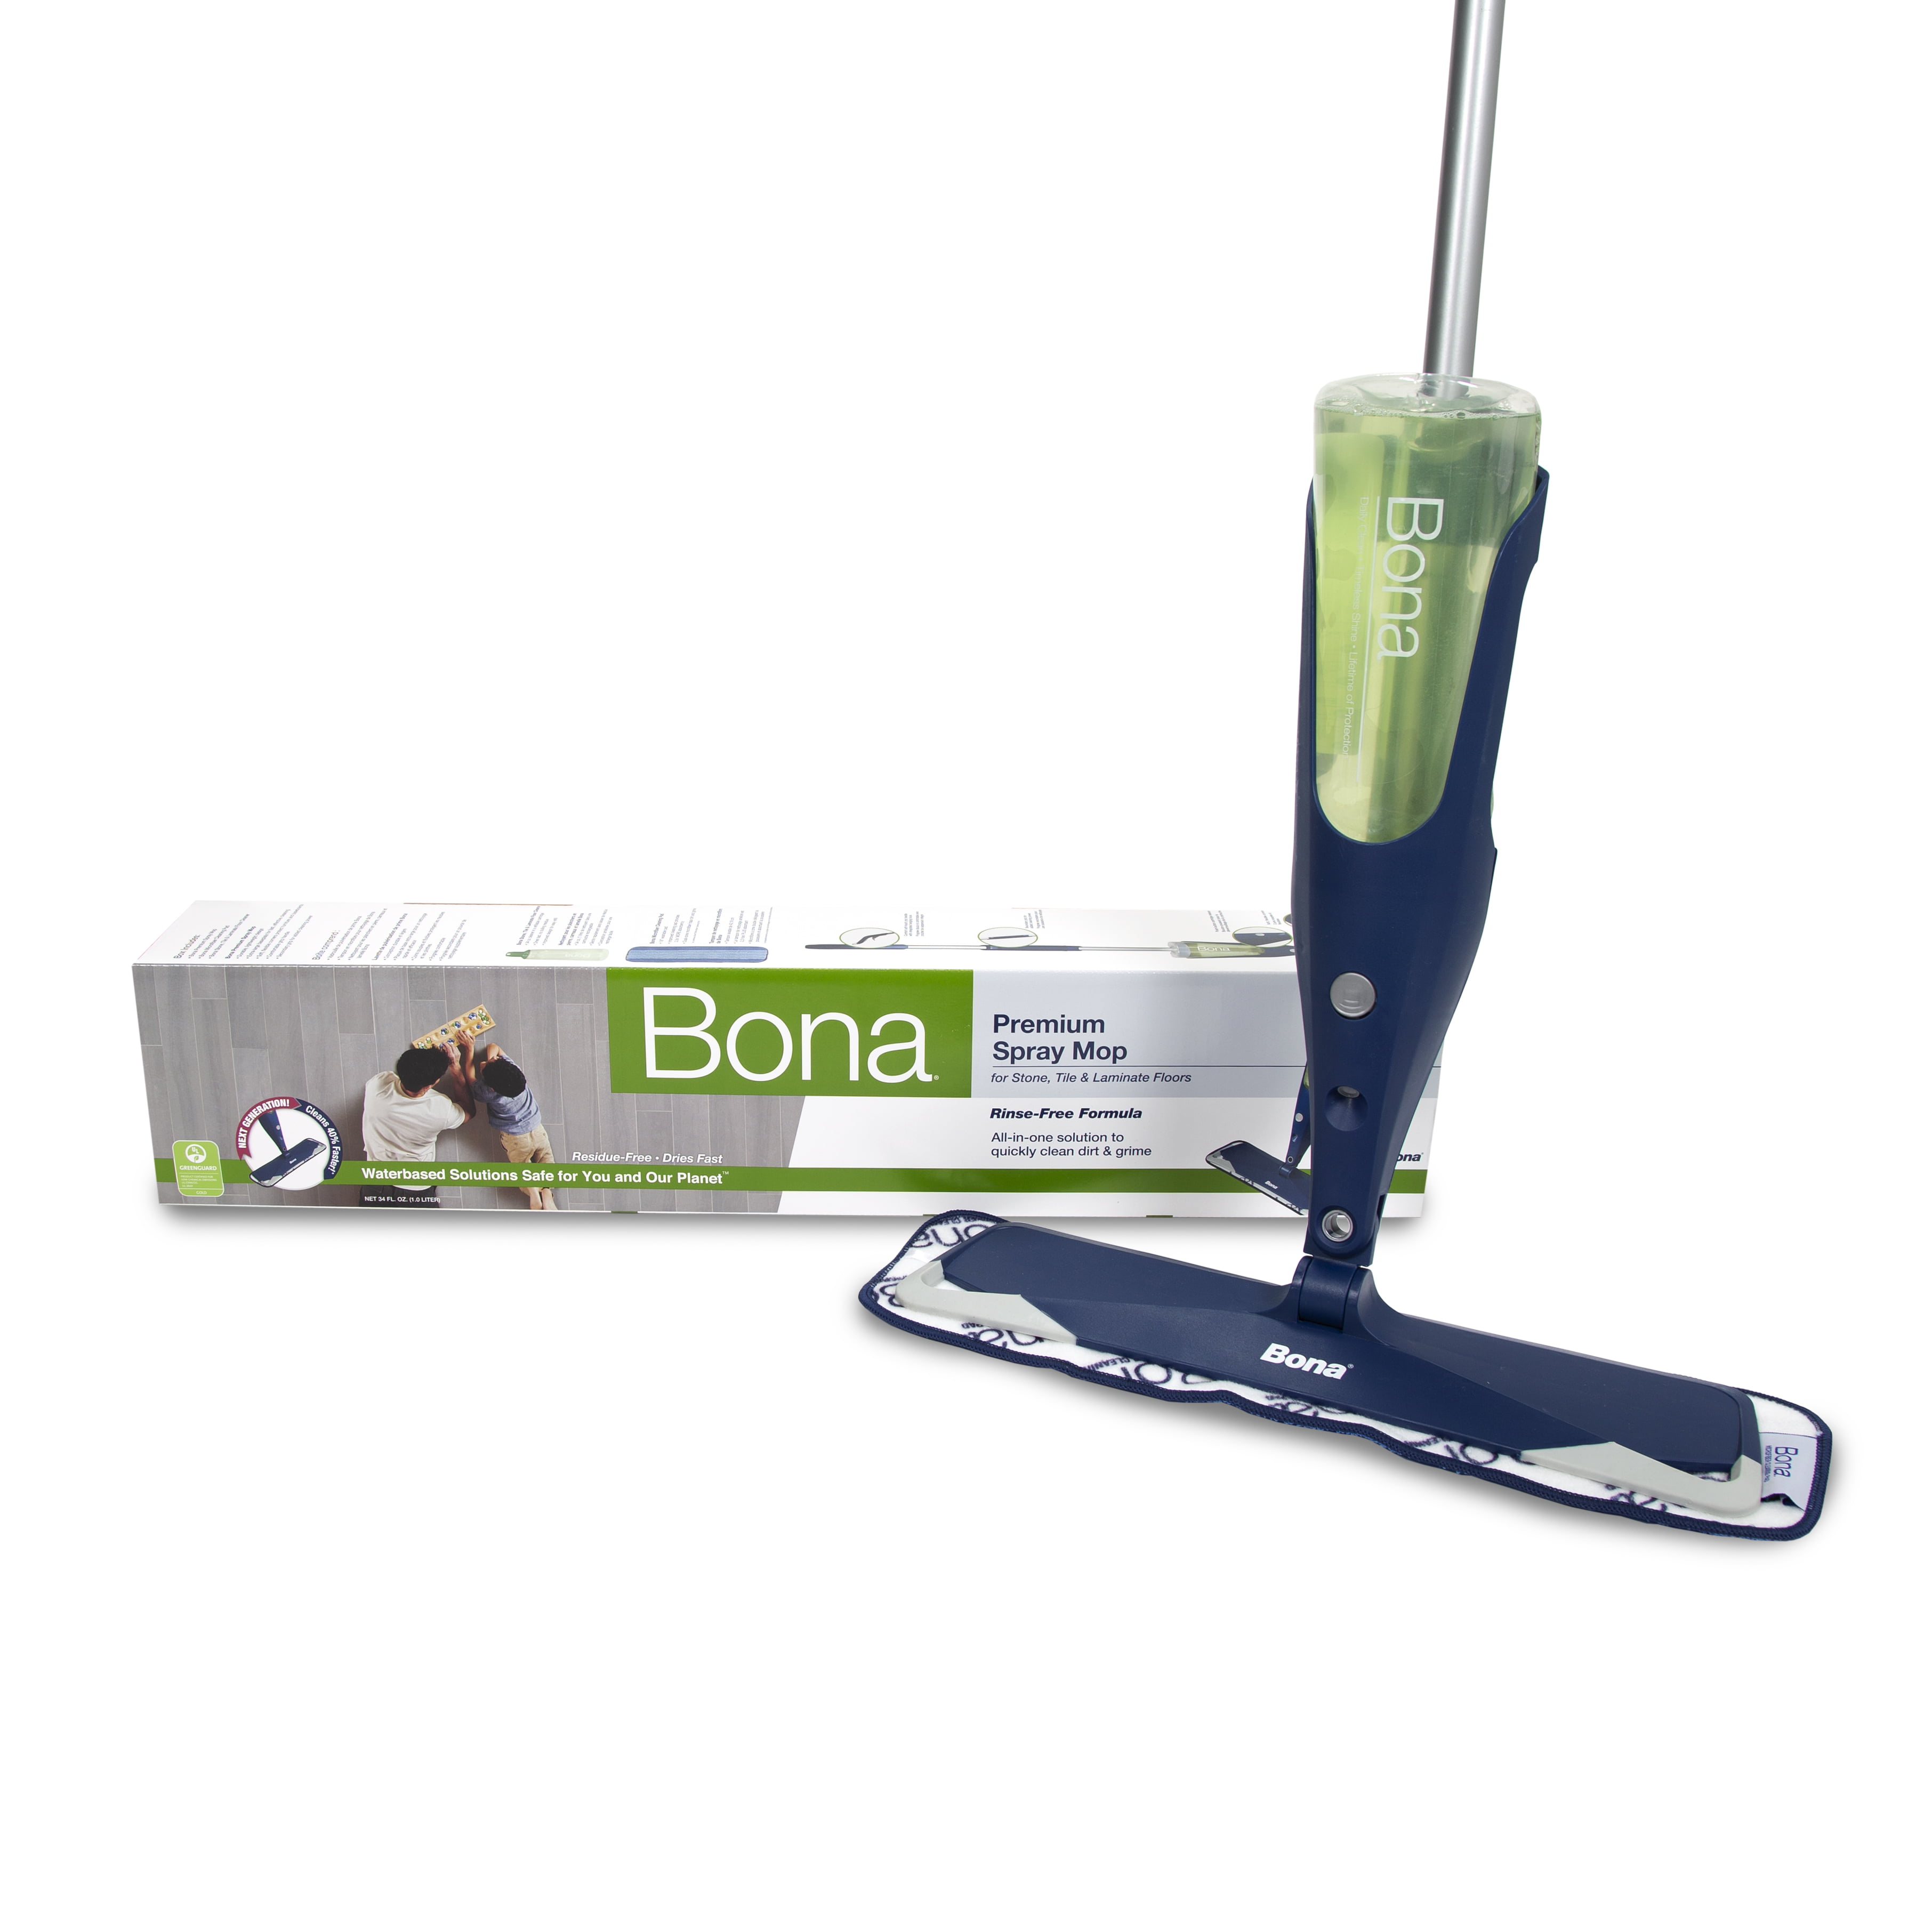 Bona Premium Spray Mop For Hard Surface, Dust Mop Spray For Laminate Floors